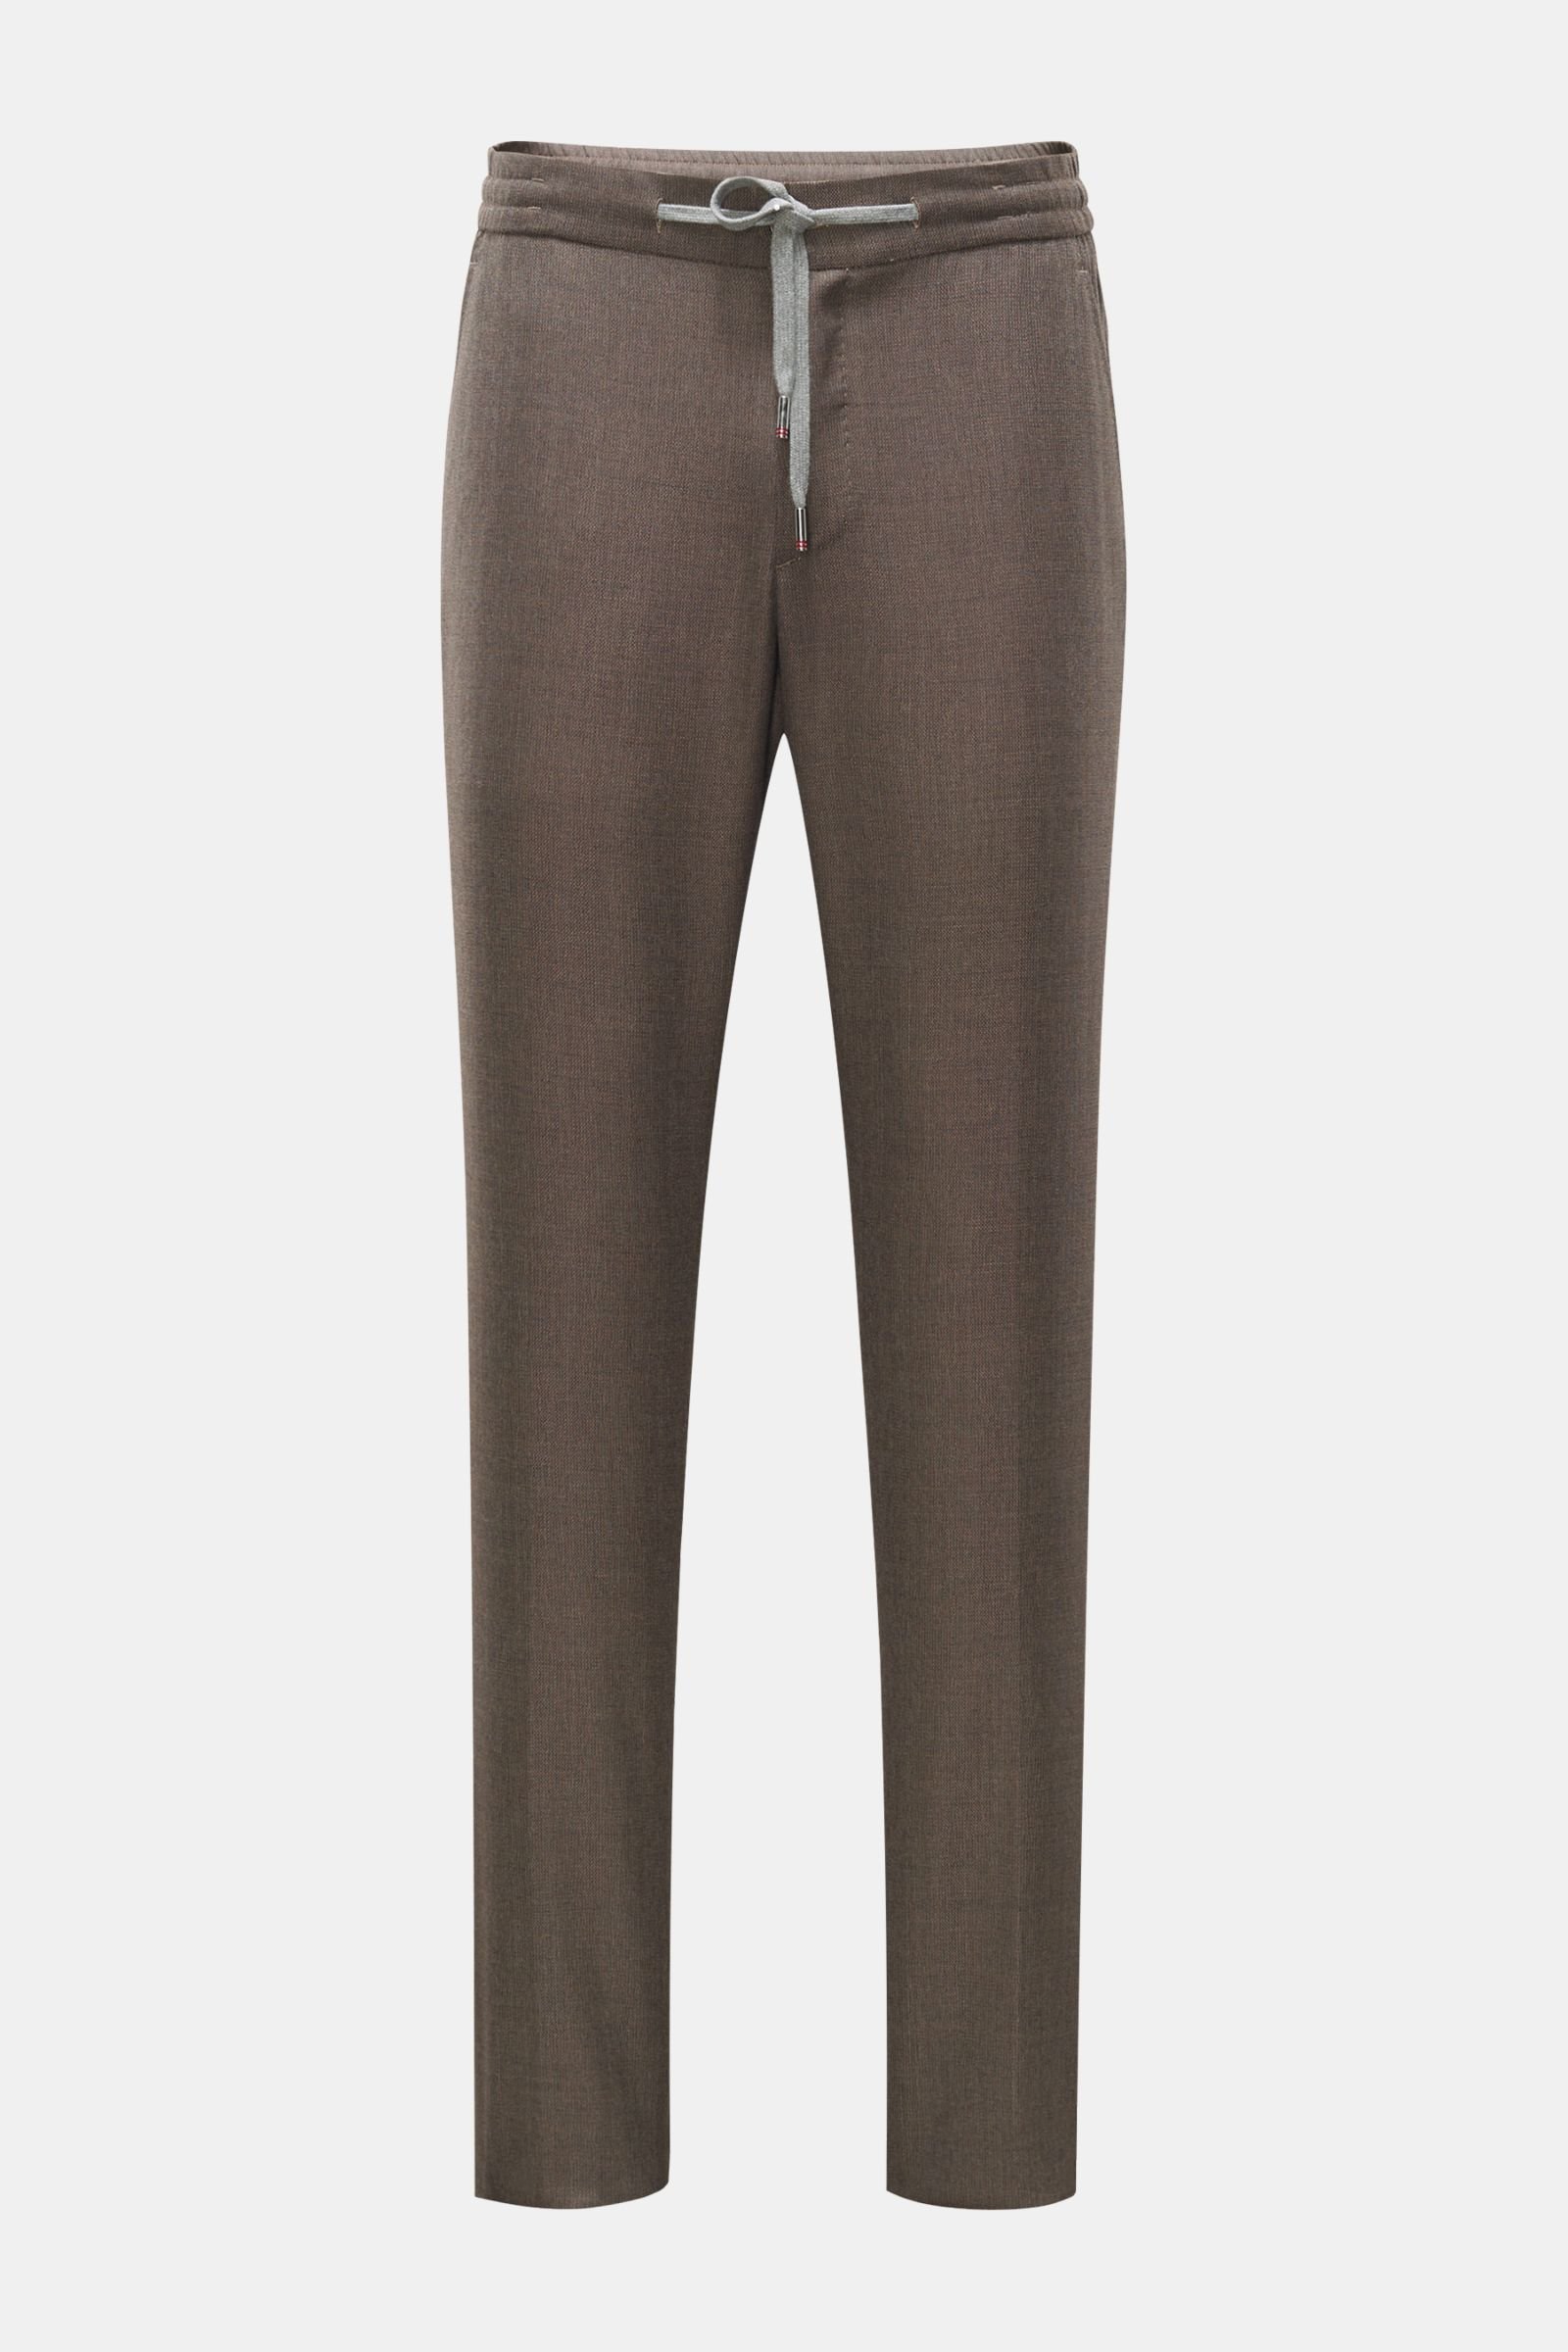 Wool jogger pants 'Caracciolo' grey-brown